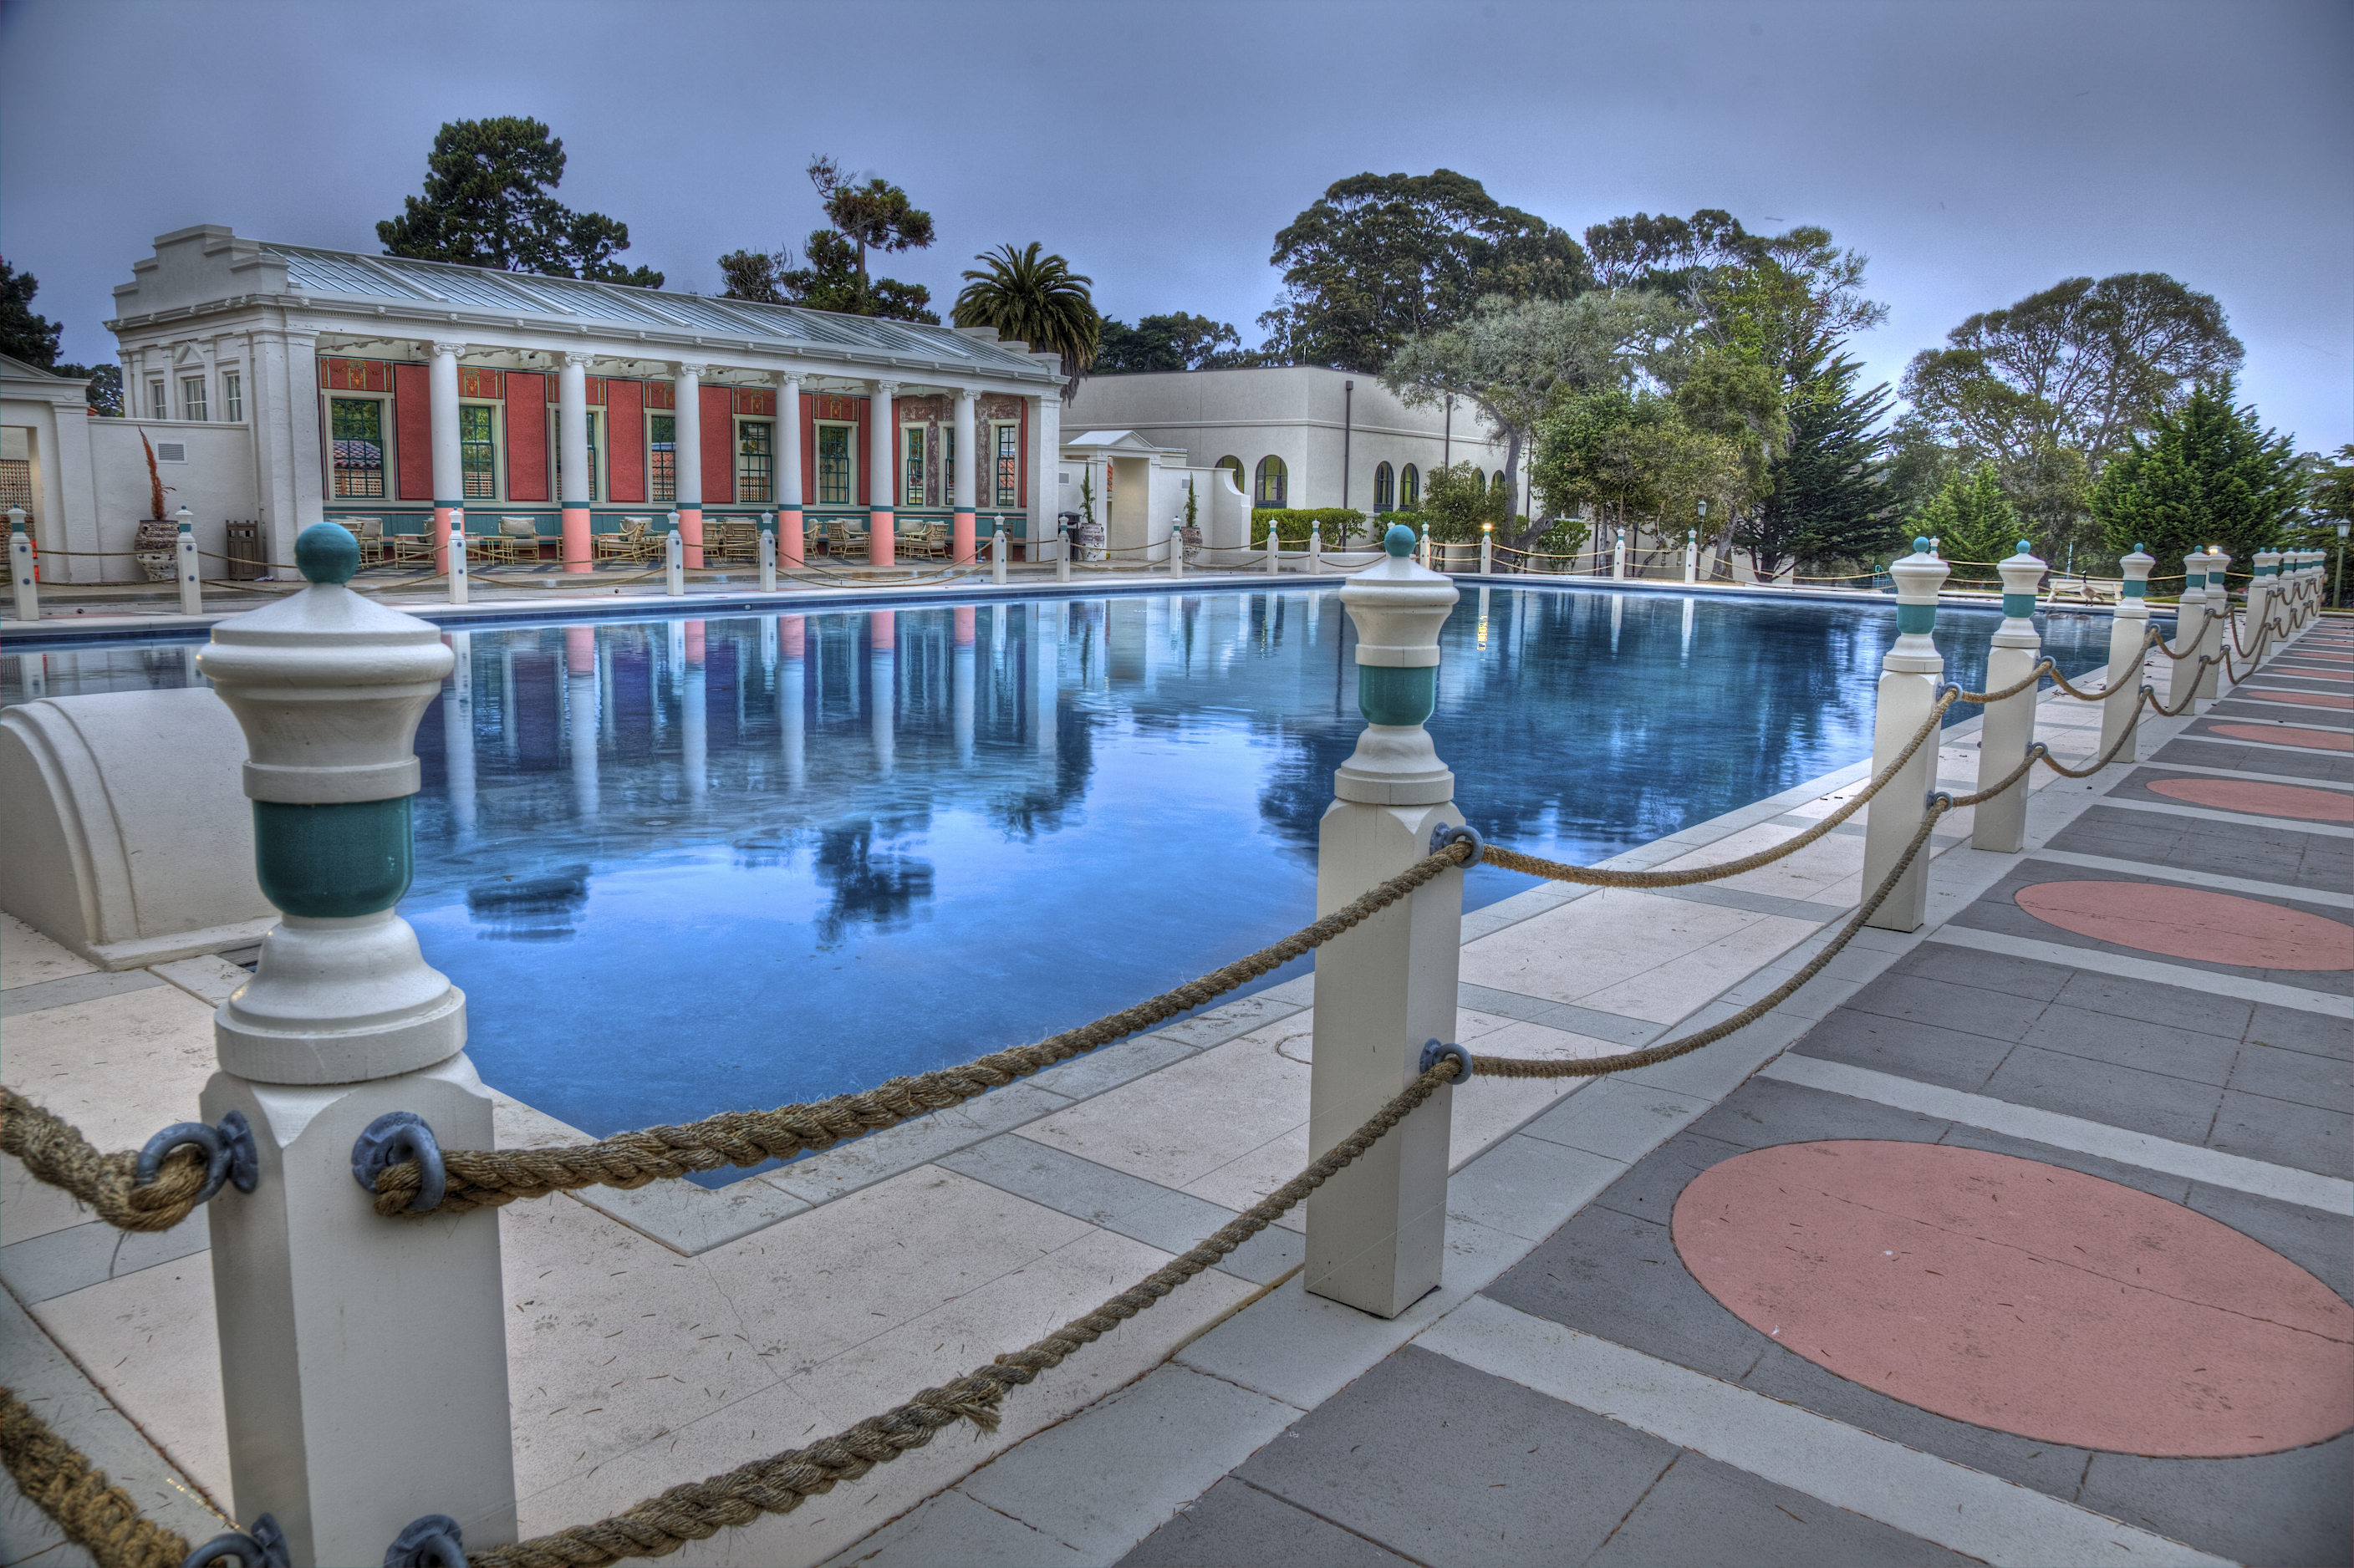 Roman Plunge Pool at Naval Postgraduate School in Monterey, California